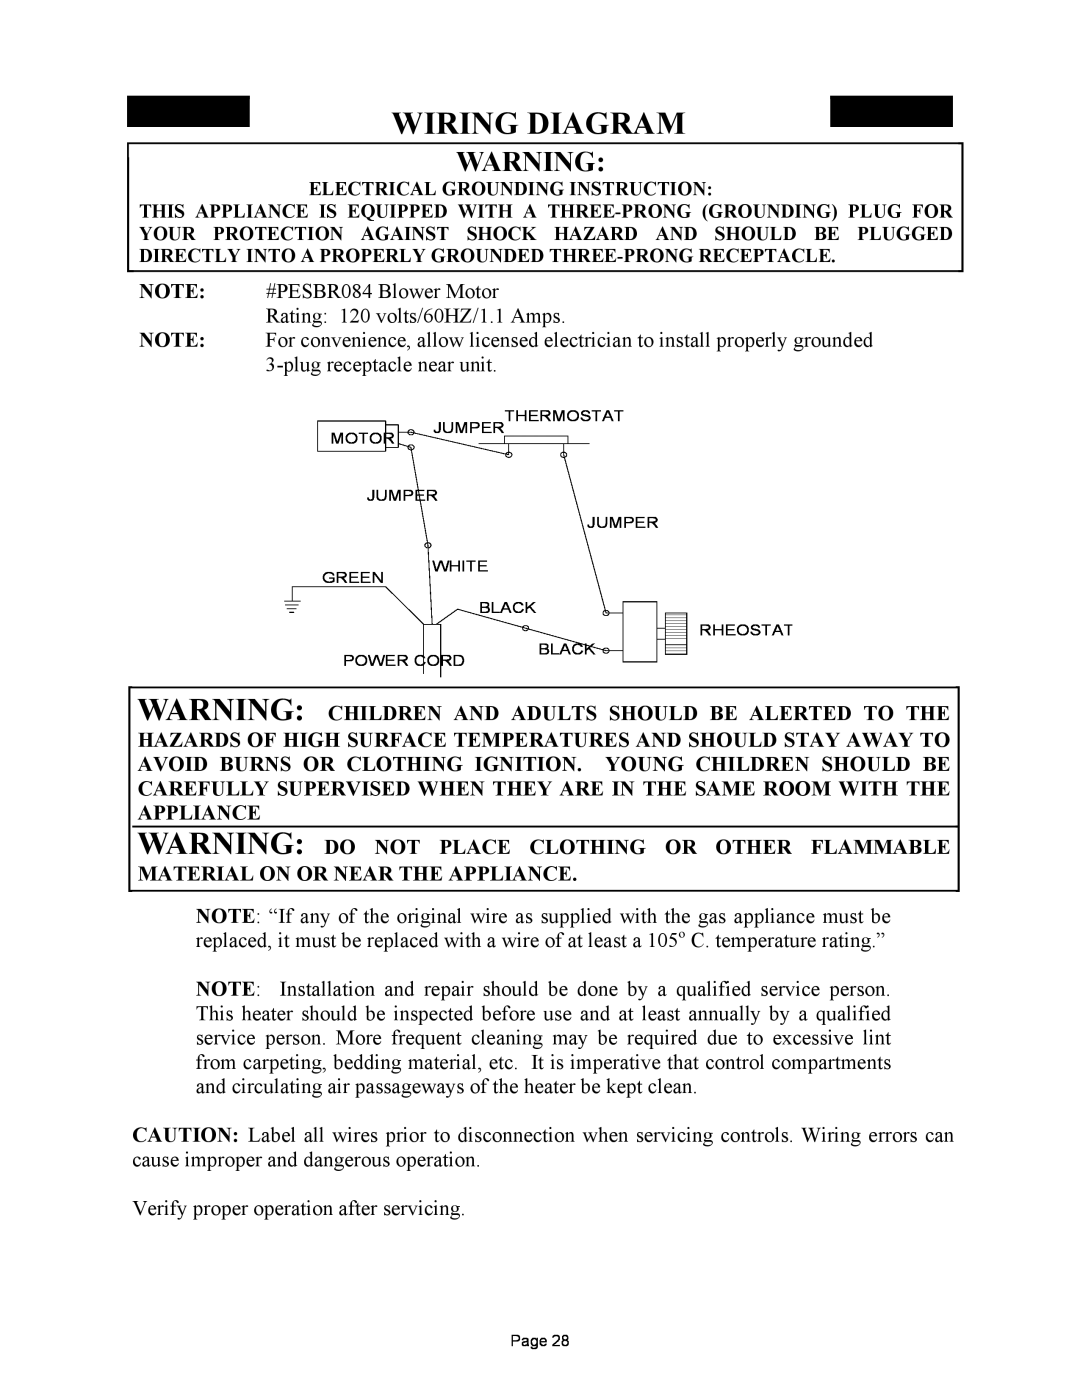 New Buck Corporation 32 manual Wiring Diagram 